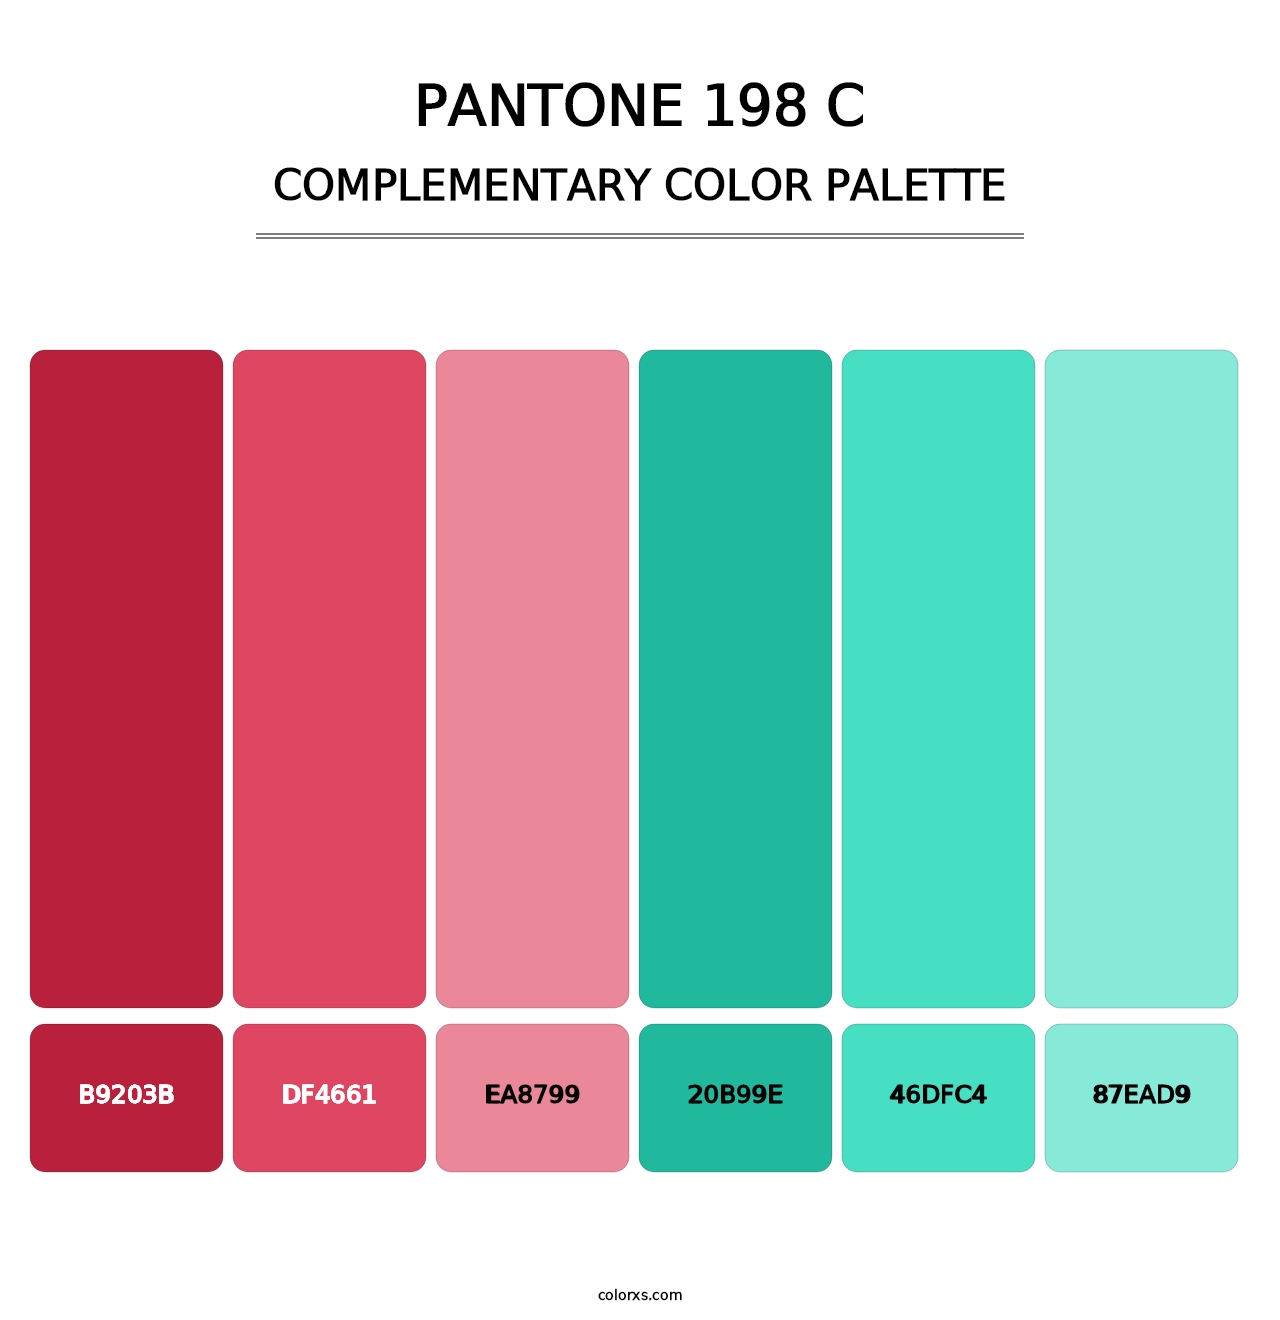 PANTONE 198 C - Complementary Color Palette